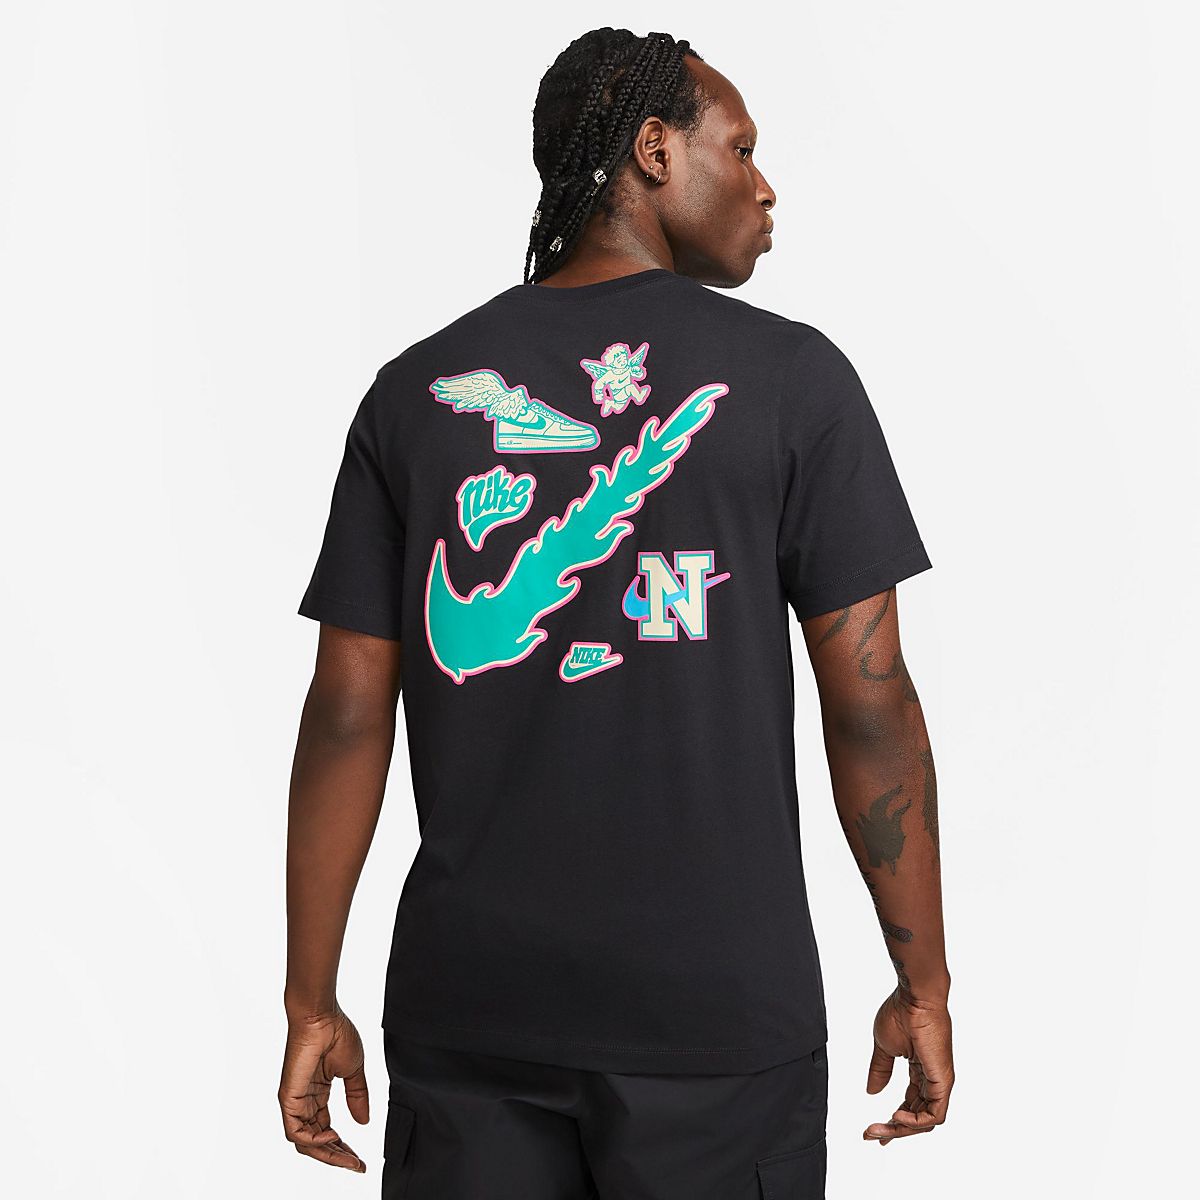 Nike Yankees Baseball T-Shirt - Size S - The Nike Tee T-Shirt - FREE  SHIPPING